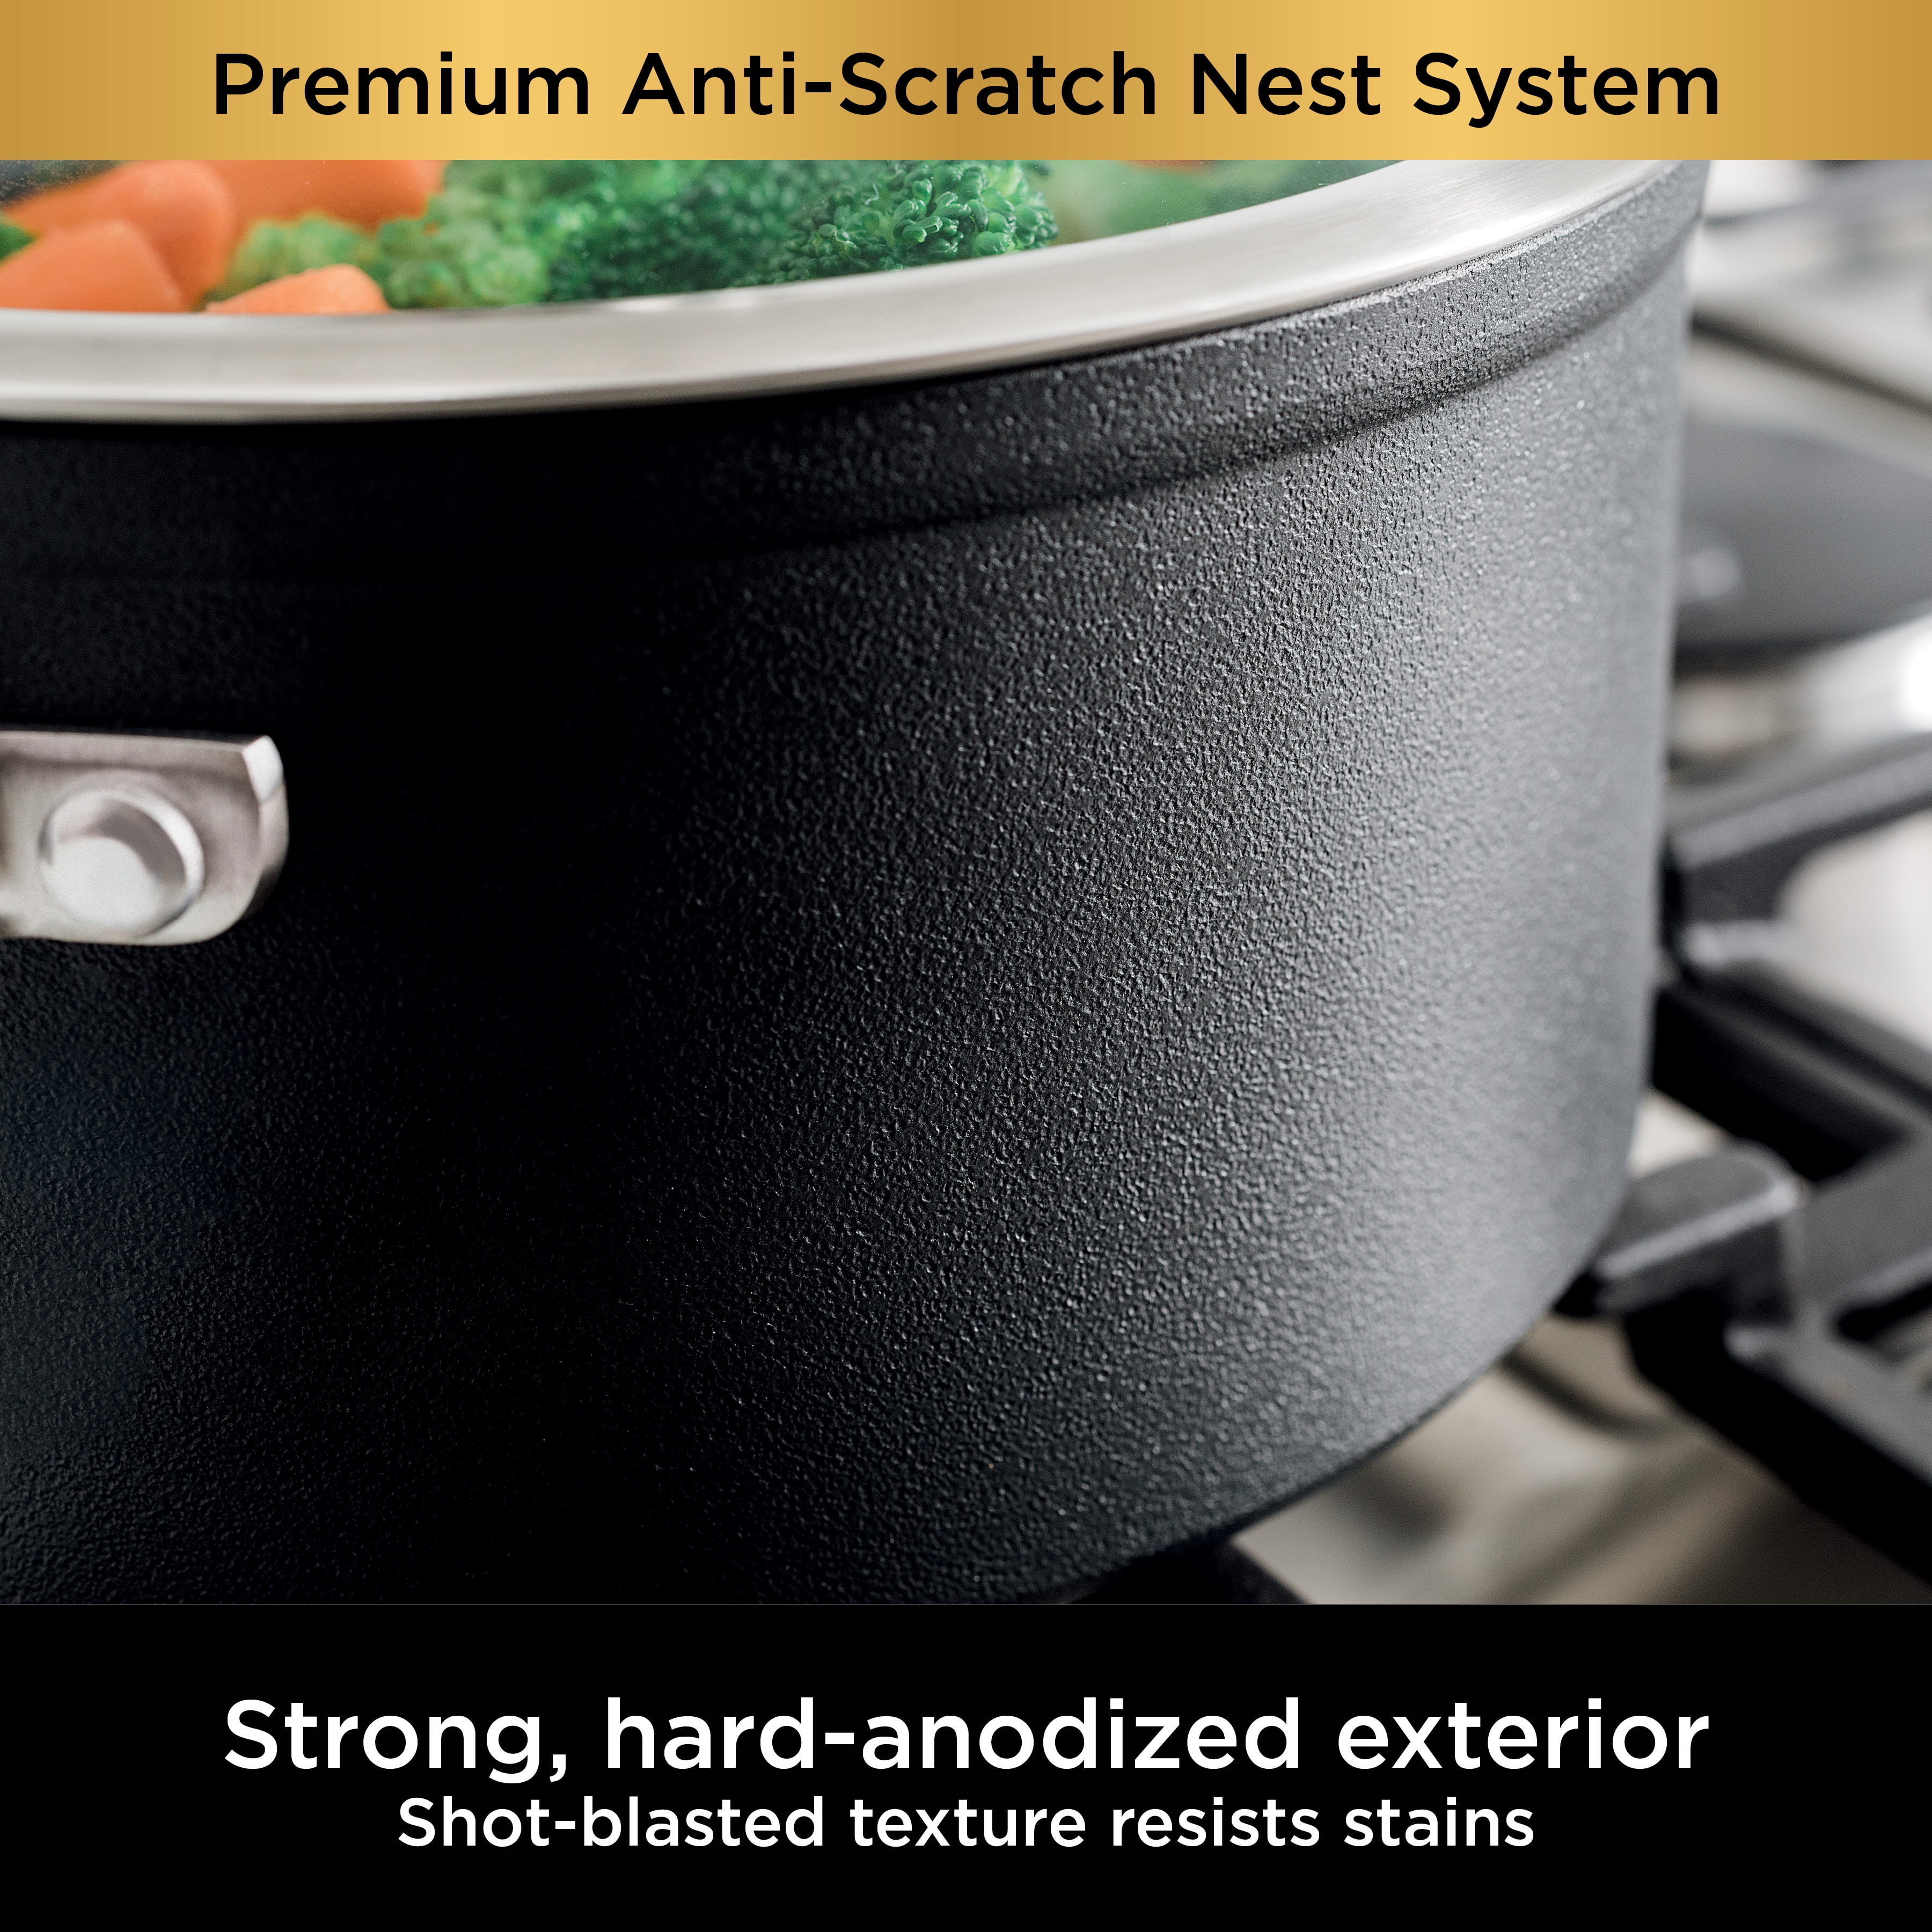 Ninja Foodi NeverStick Premium Anti-Scratch Nest System, 3-Piece Cookware Set C53300